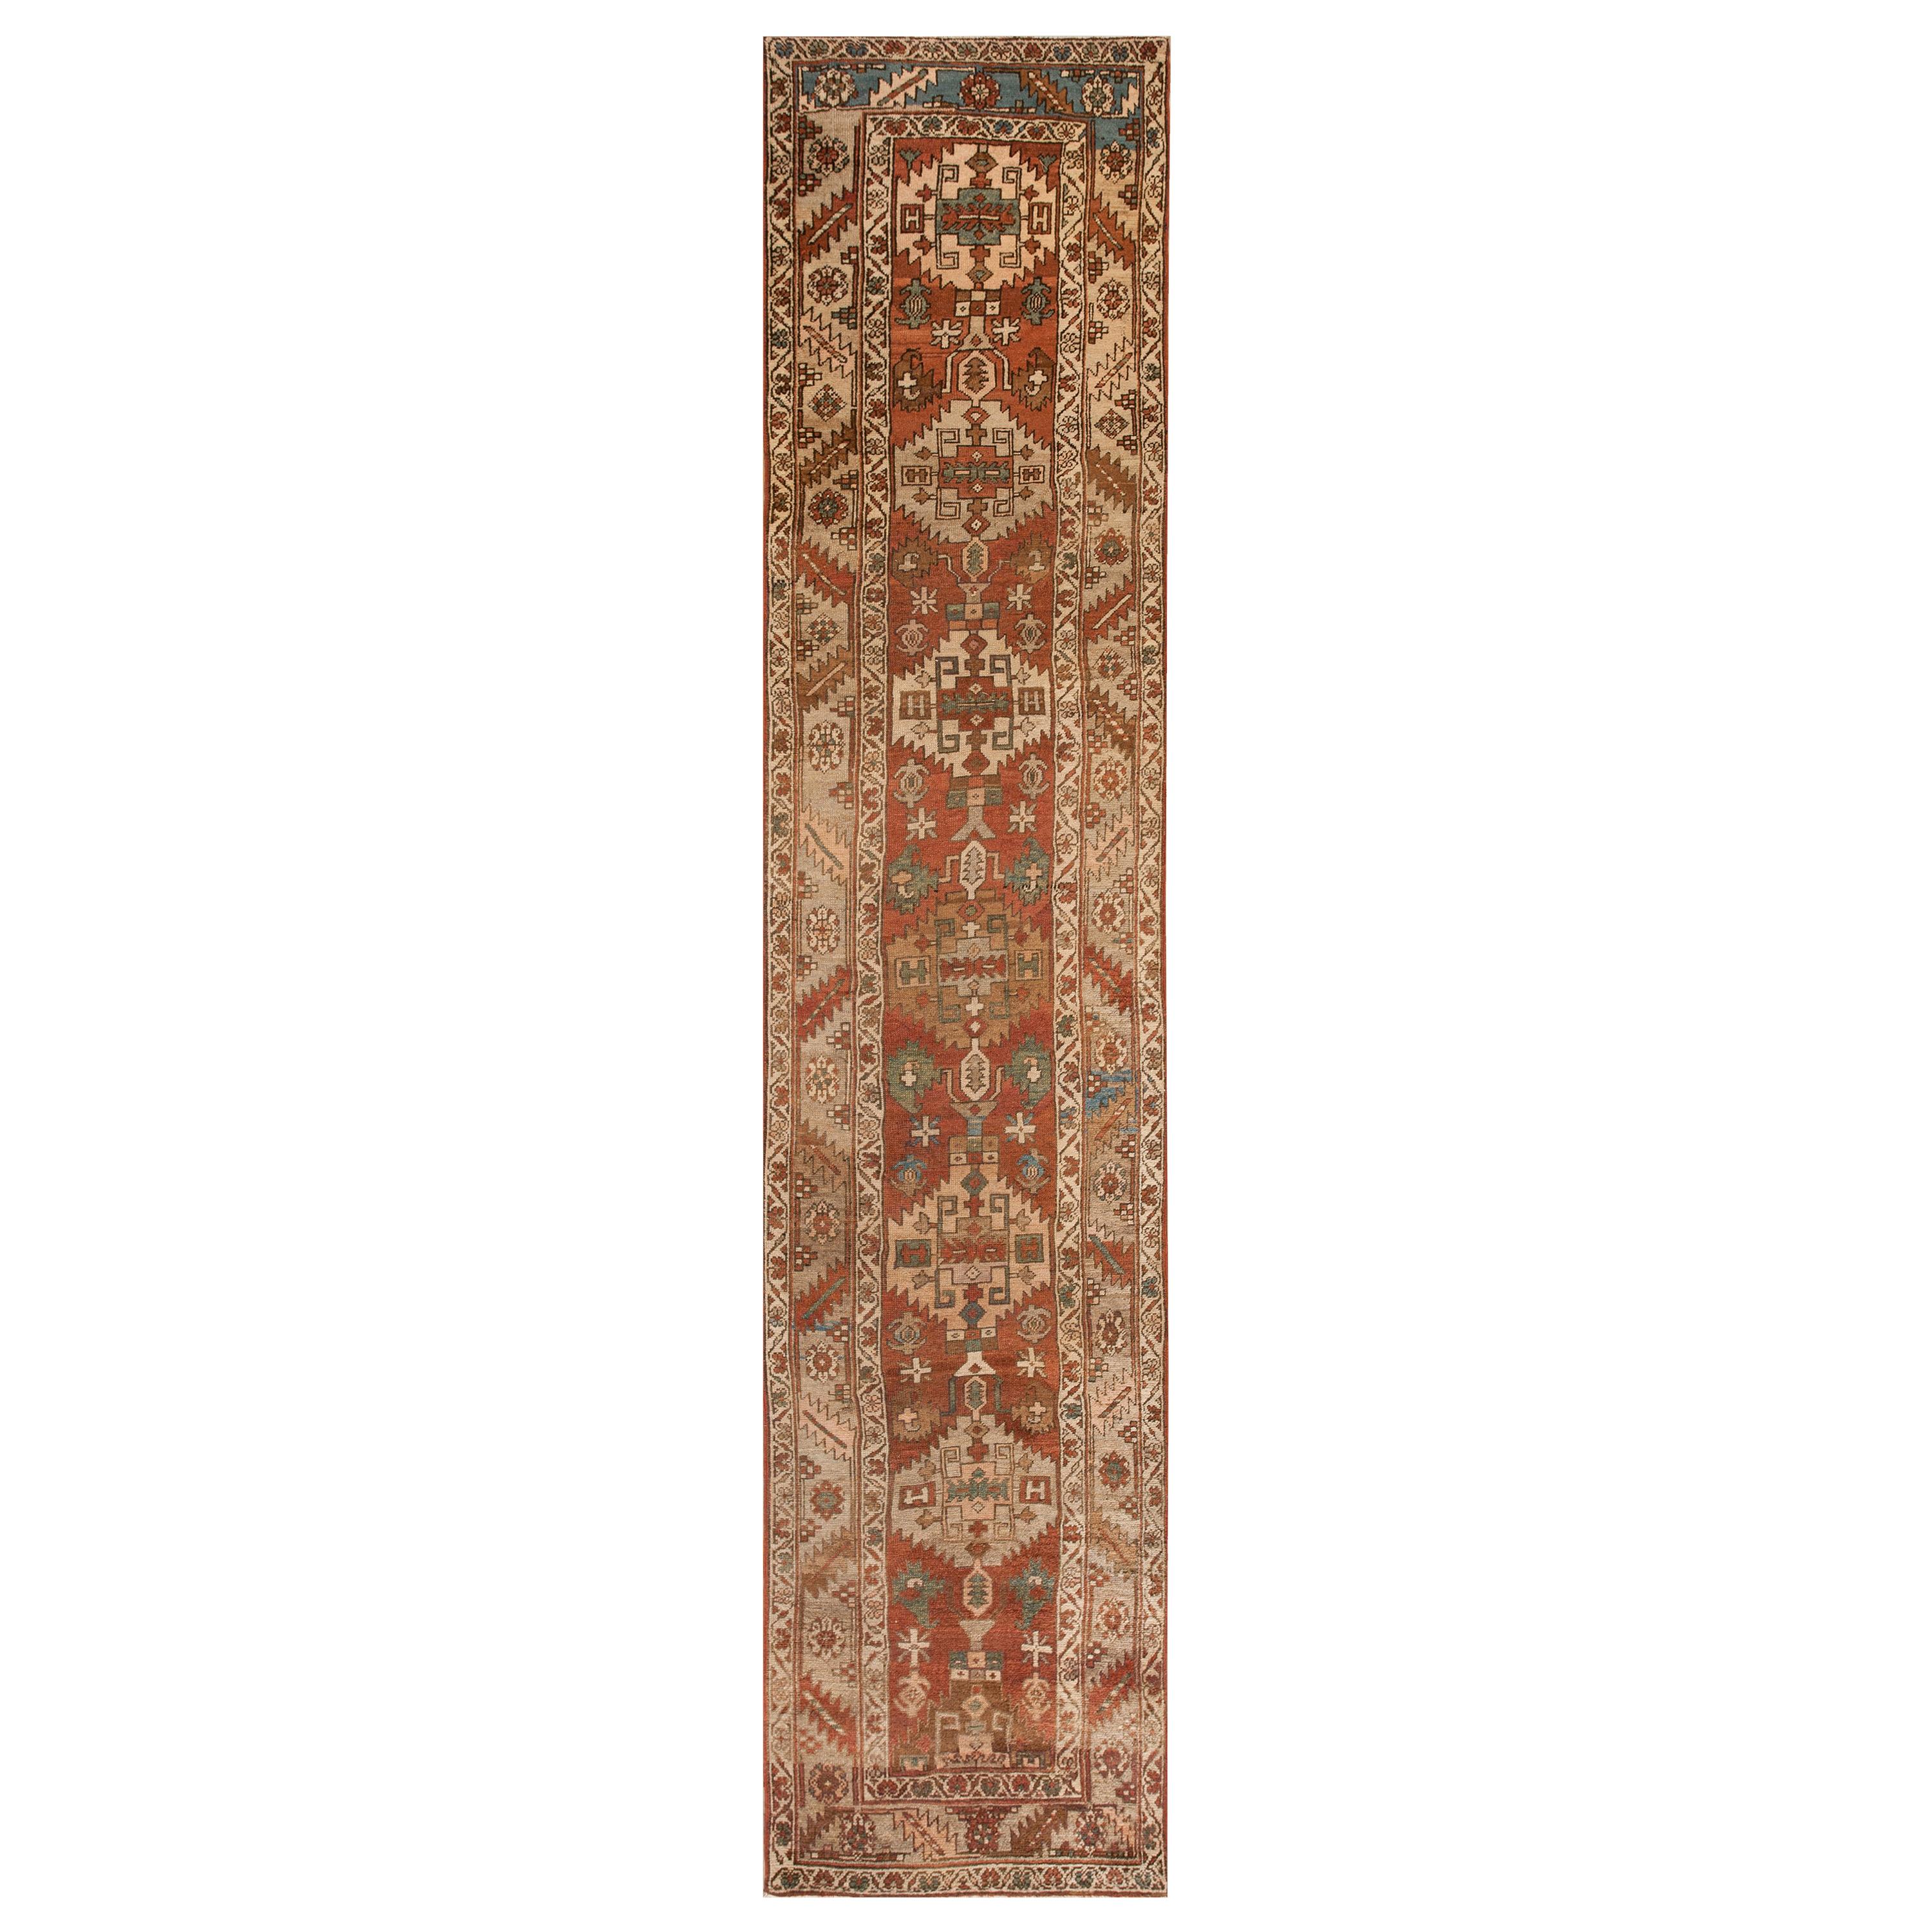 Late 19th Century N.W. Persian Serapi Carpet ( 3'2" x 13'10" - 97 x 442 ) For Sale